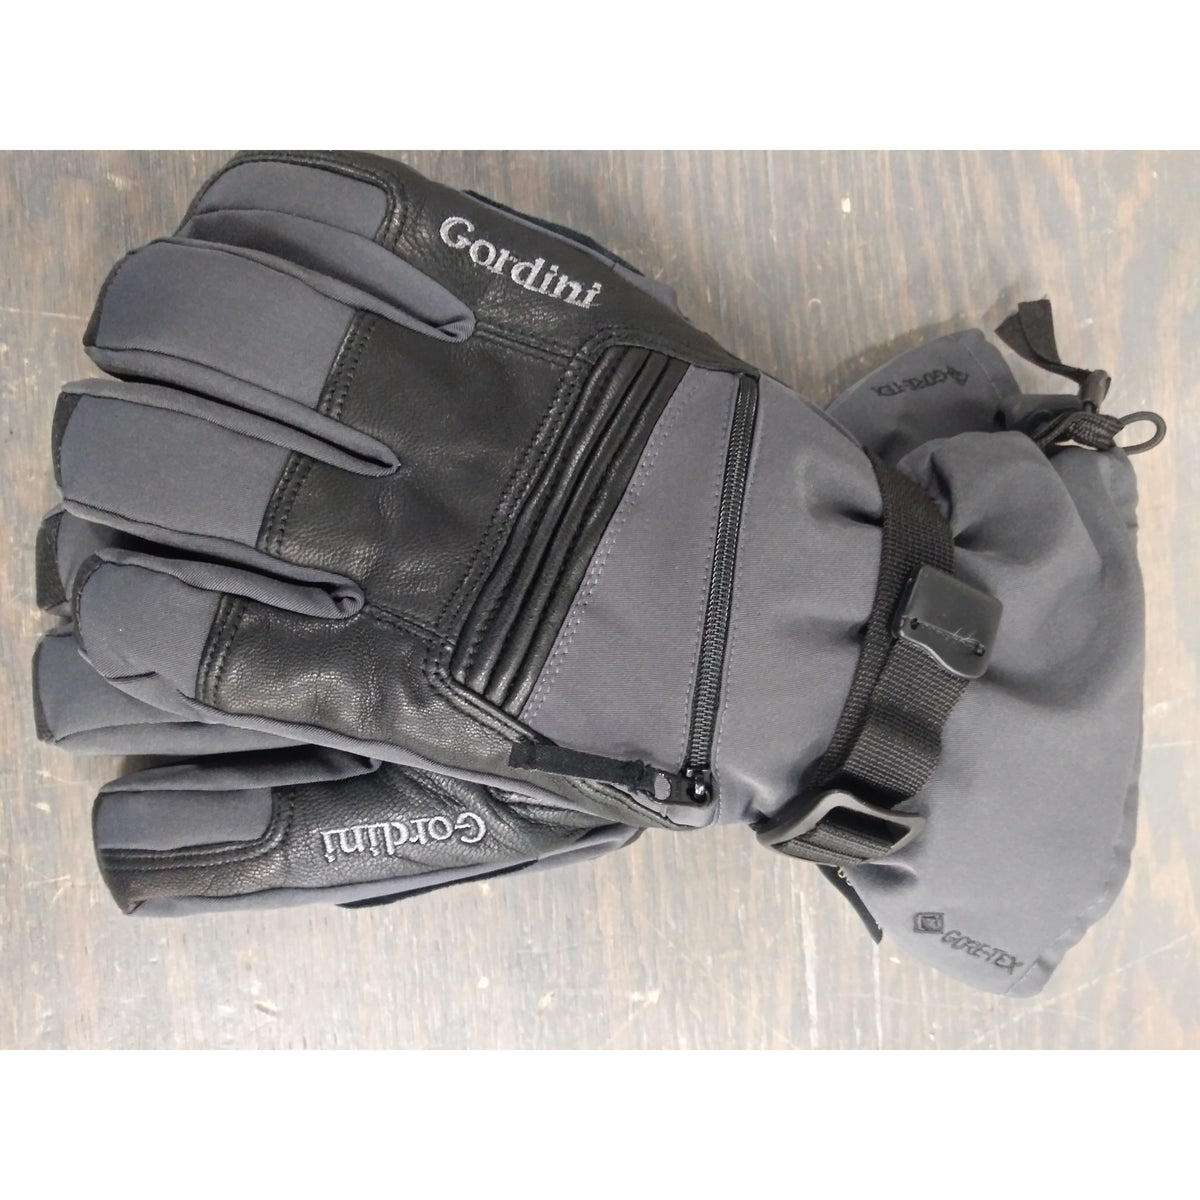 Gordini GTX Storm Trooper Gloves - Gunmetal/Black - Large - Used - Acceptable